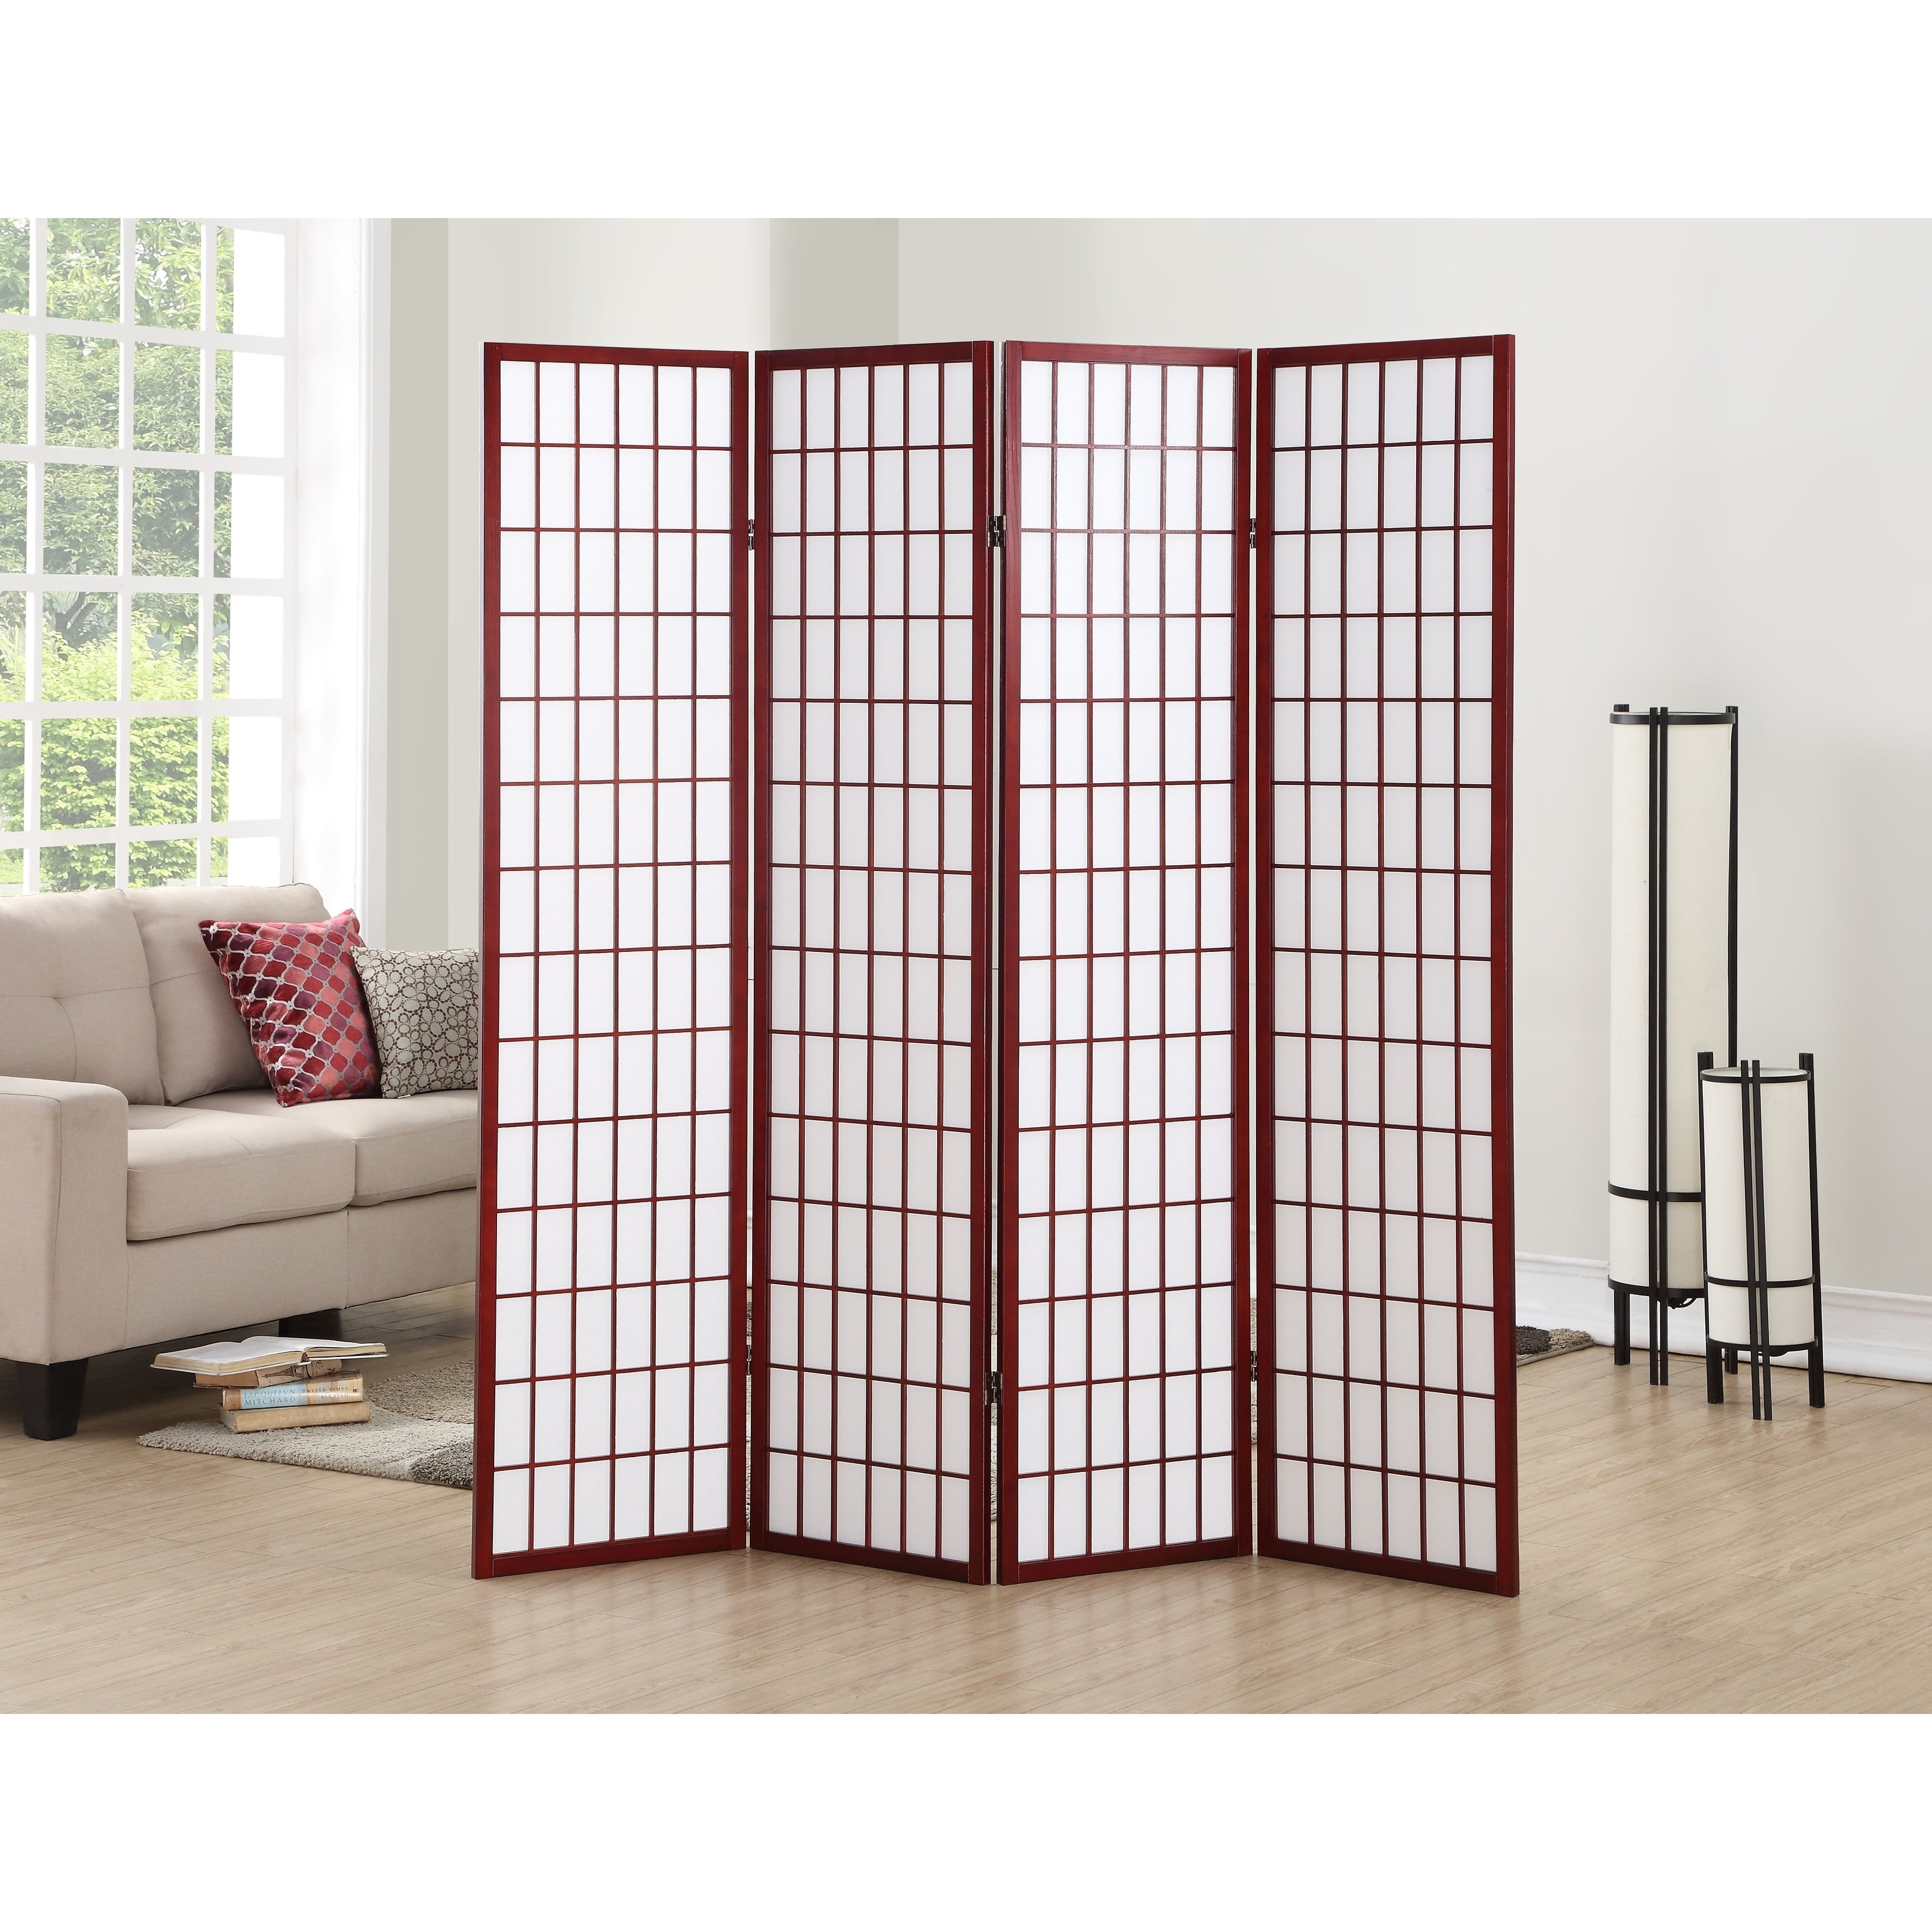 Oriental Room Divider Hardwood Shoji Screen Stand Cherry, 4 Panel 